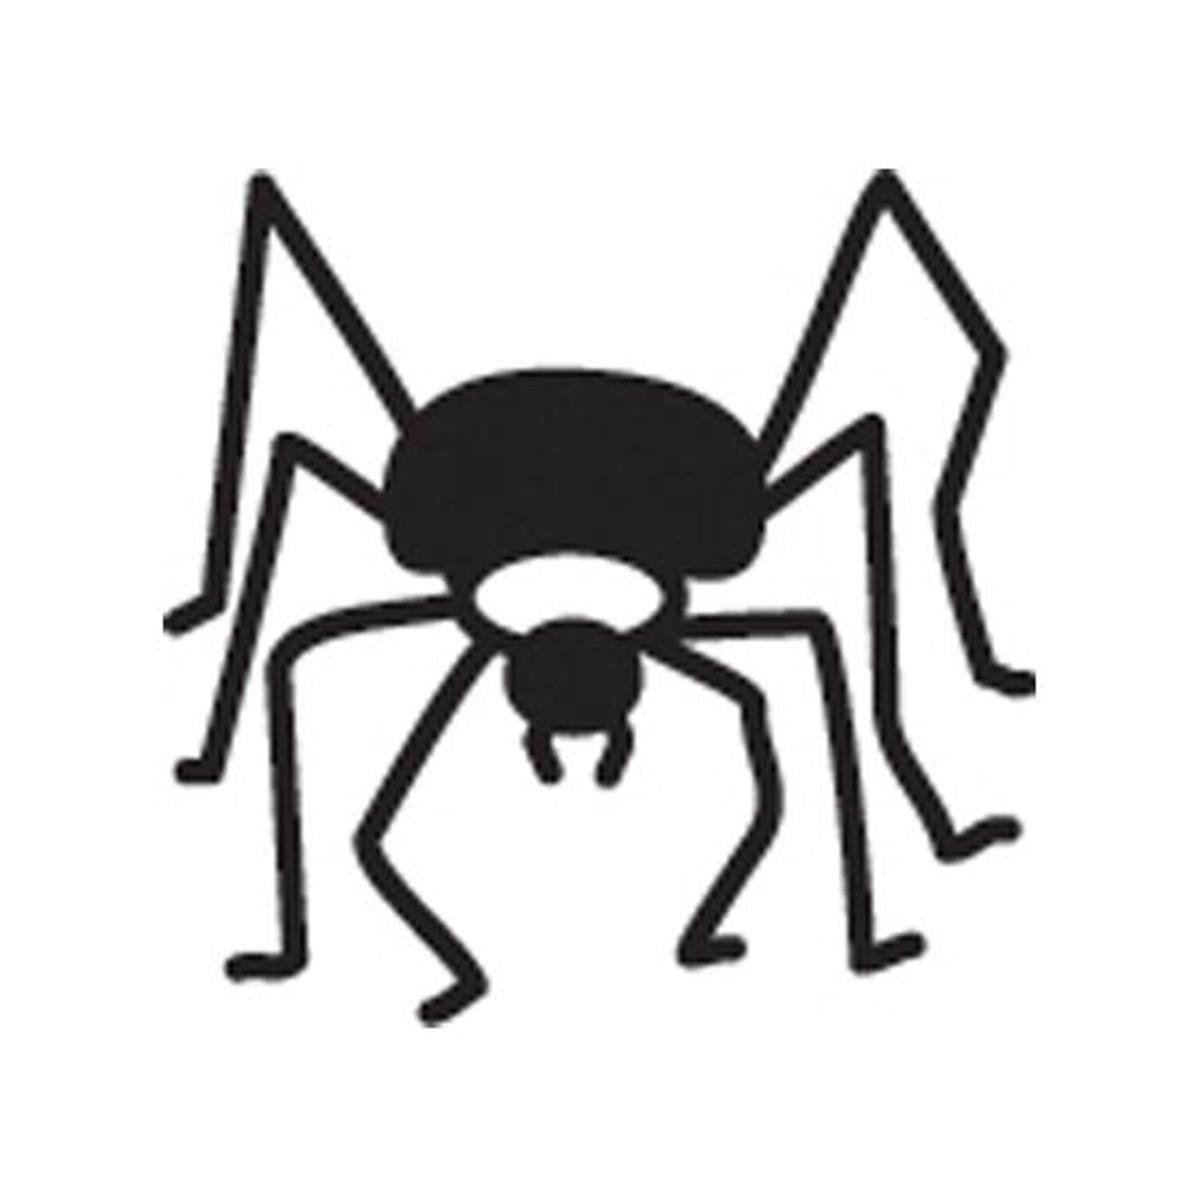 Se-0438 0.5 X 0.5 In. Incentive Stamp - Spider